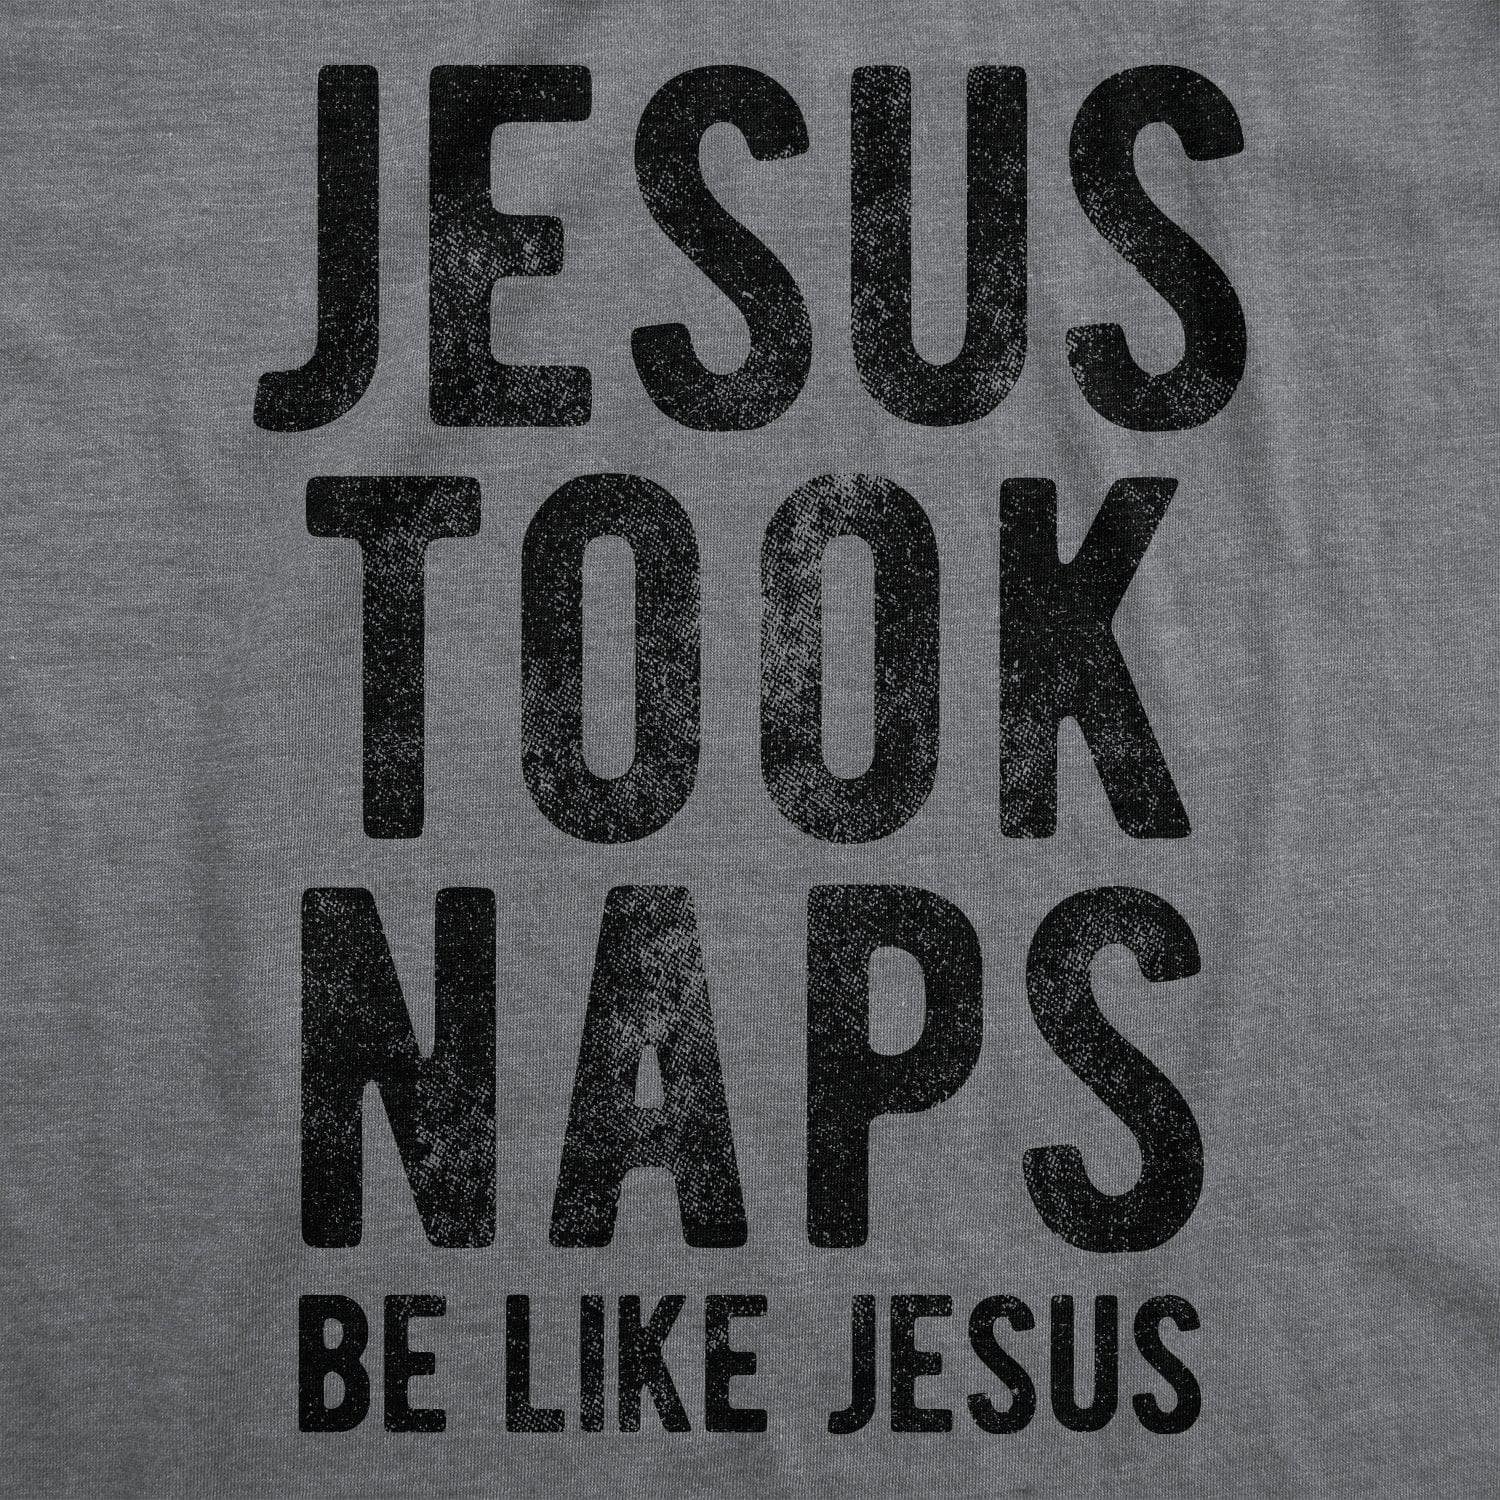 Jesus Took Naps Women's Tshirt  -  Crazy Dog T-Shirts